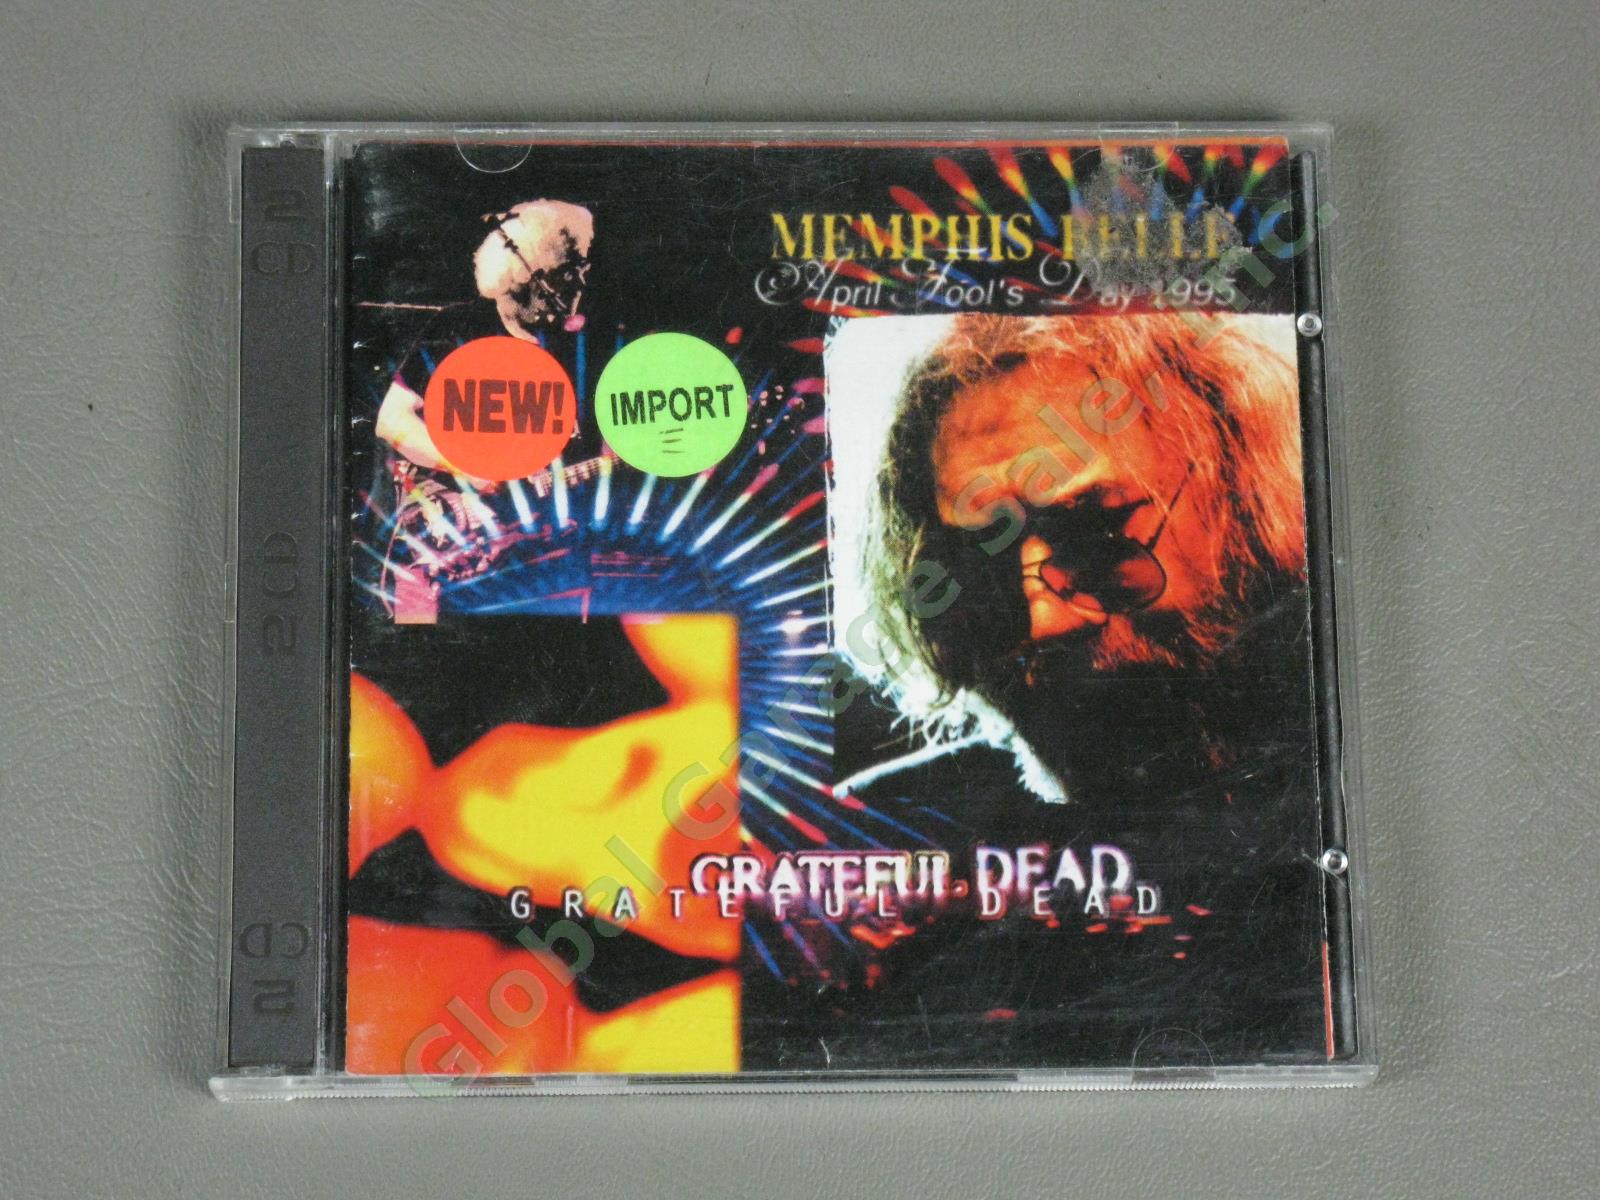 Vtg 1990s Grateful Dead Live Unreleased Show Concert Import CD VHS Lot 16 Discs 15